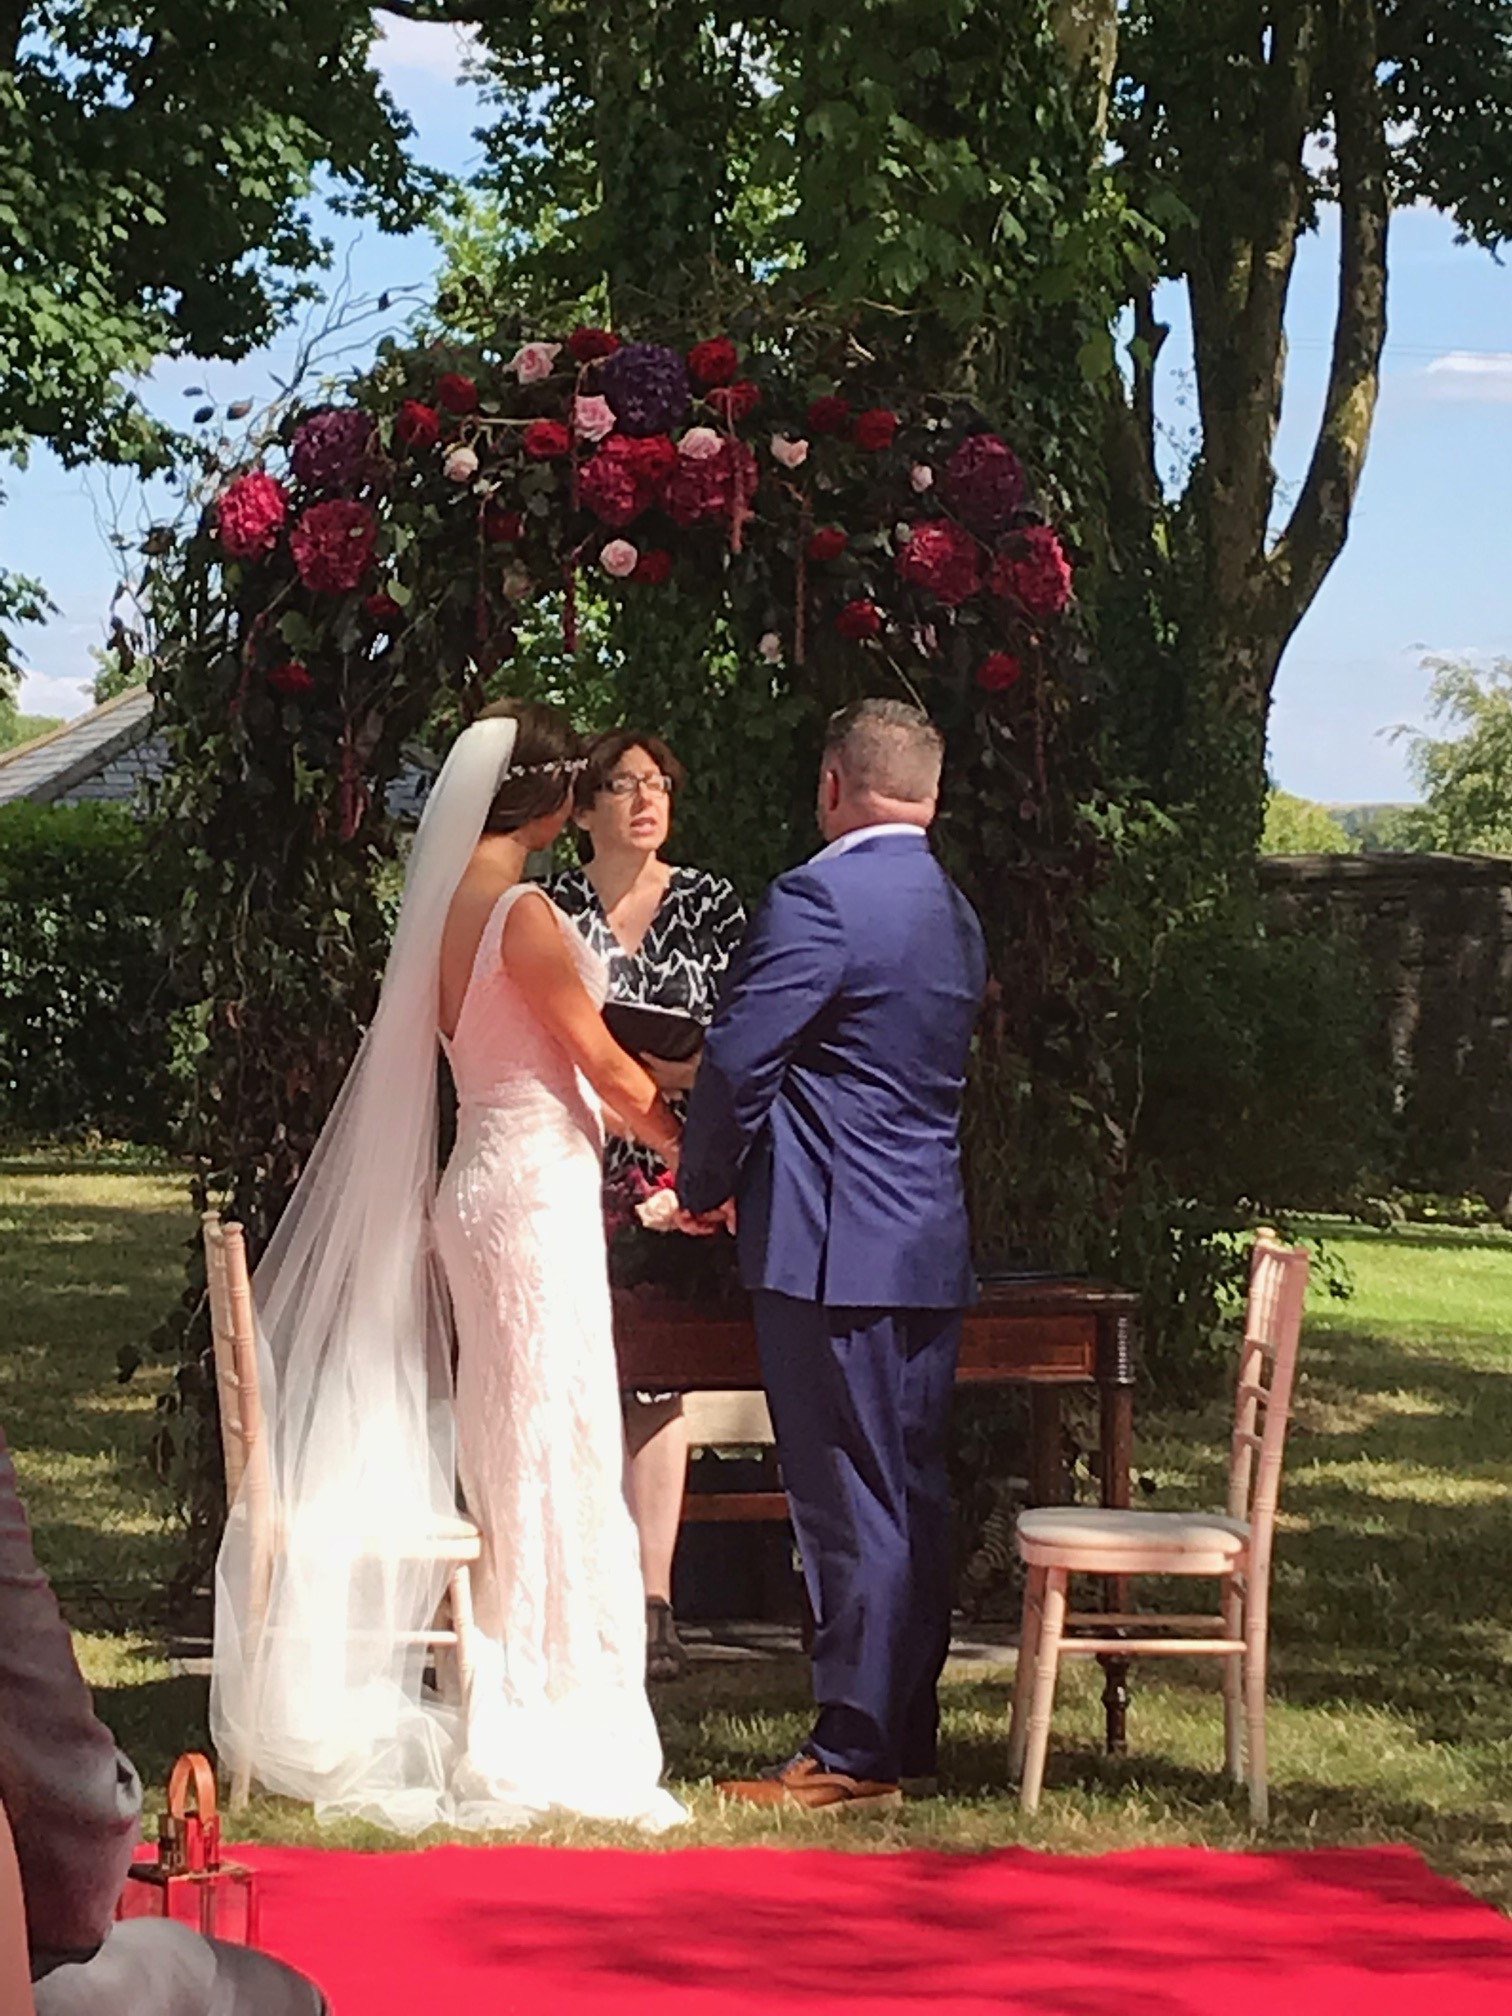 Zoe Holohan and Brian O’Callaghan-Westropp were newly married (Handout/PA)